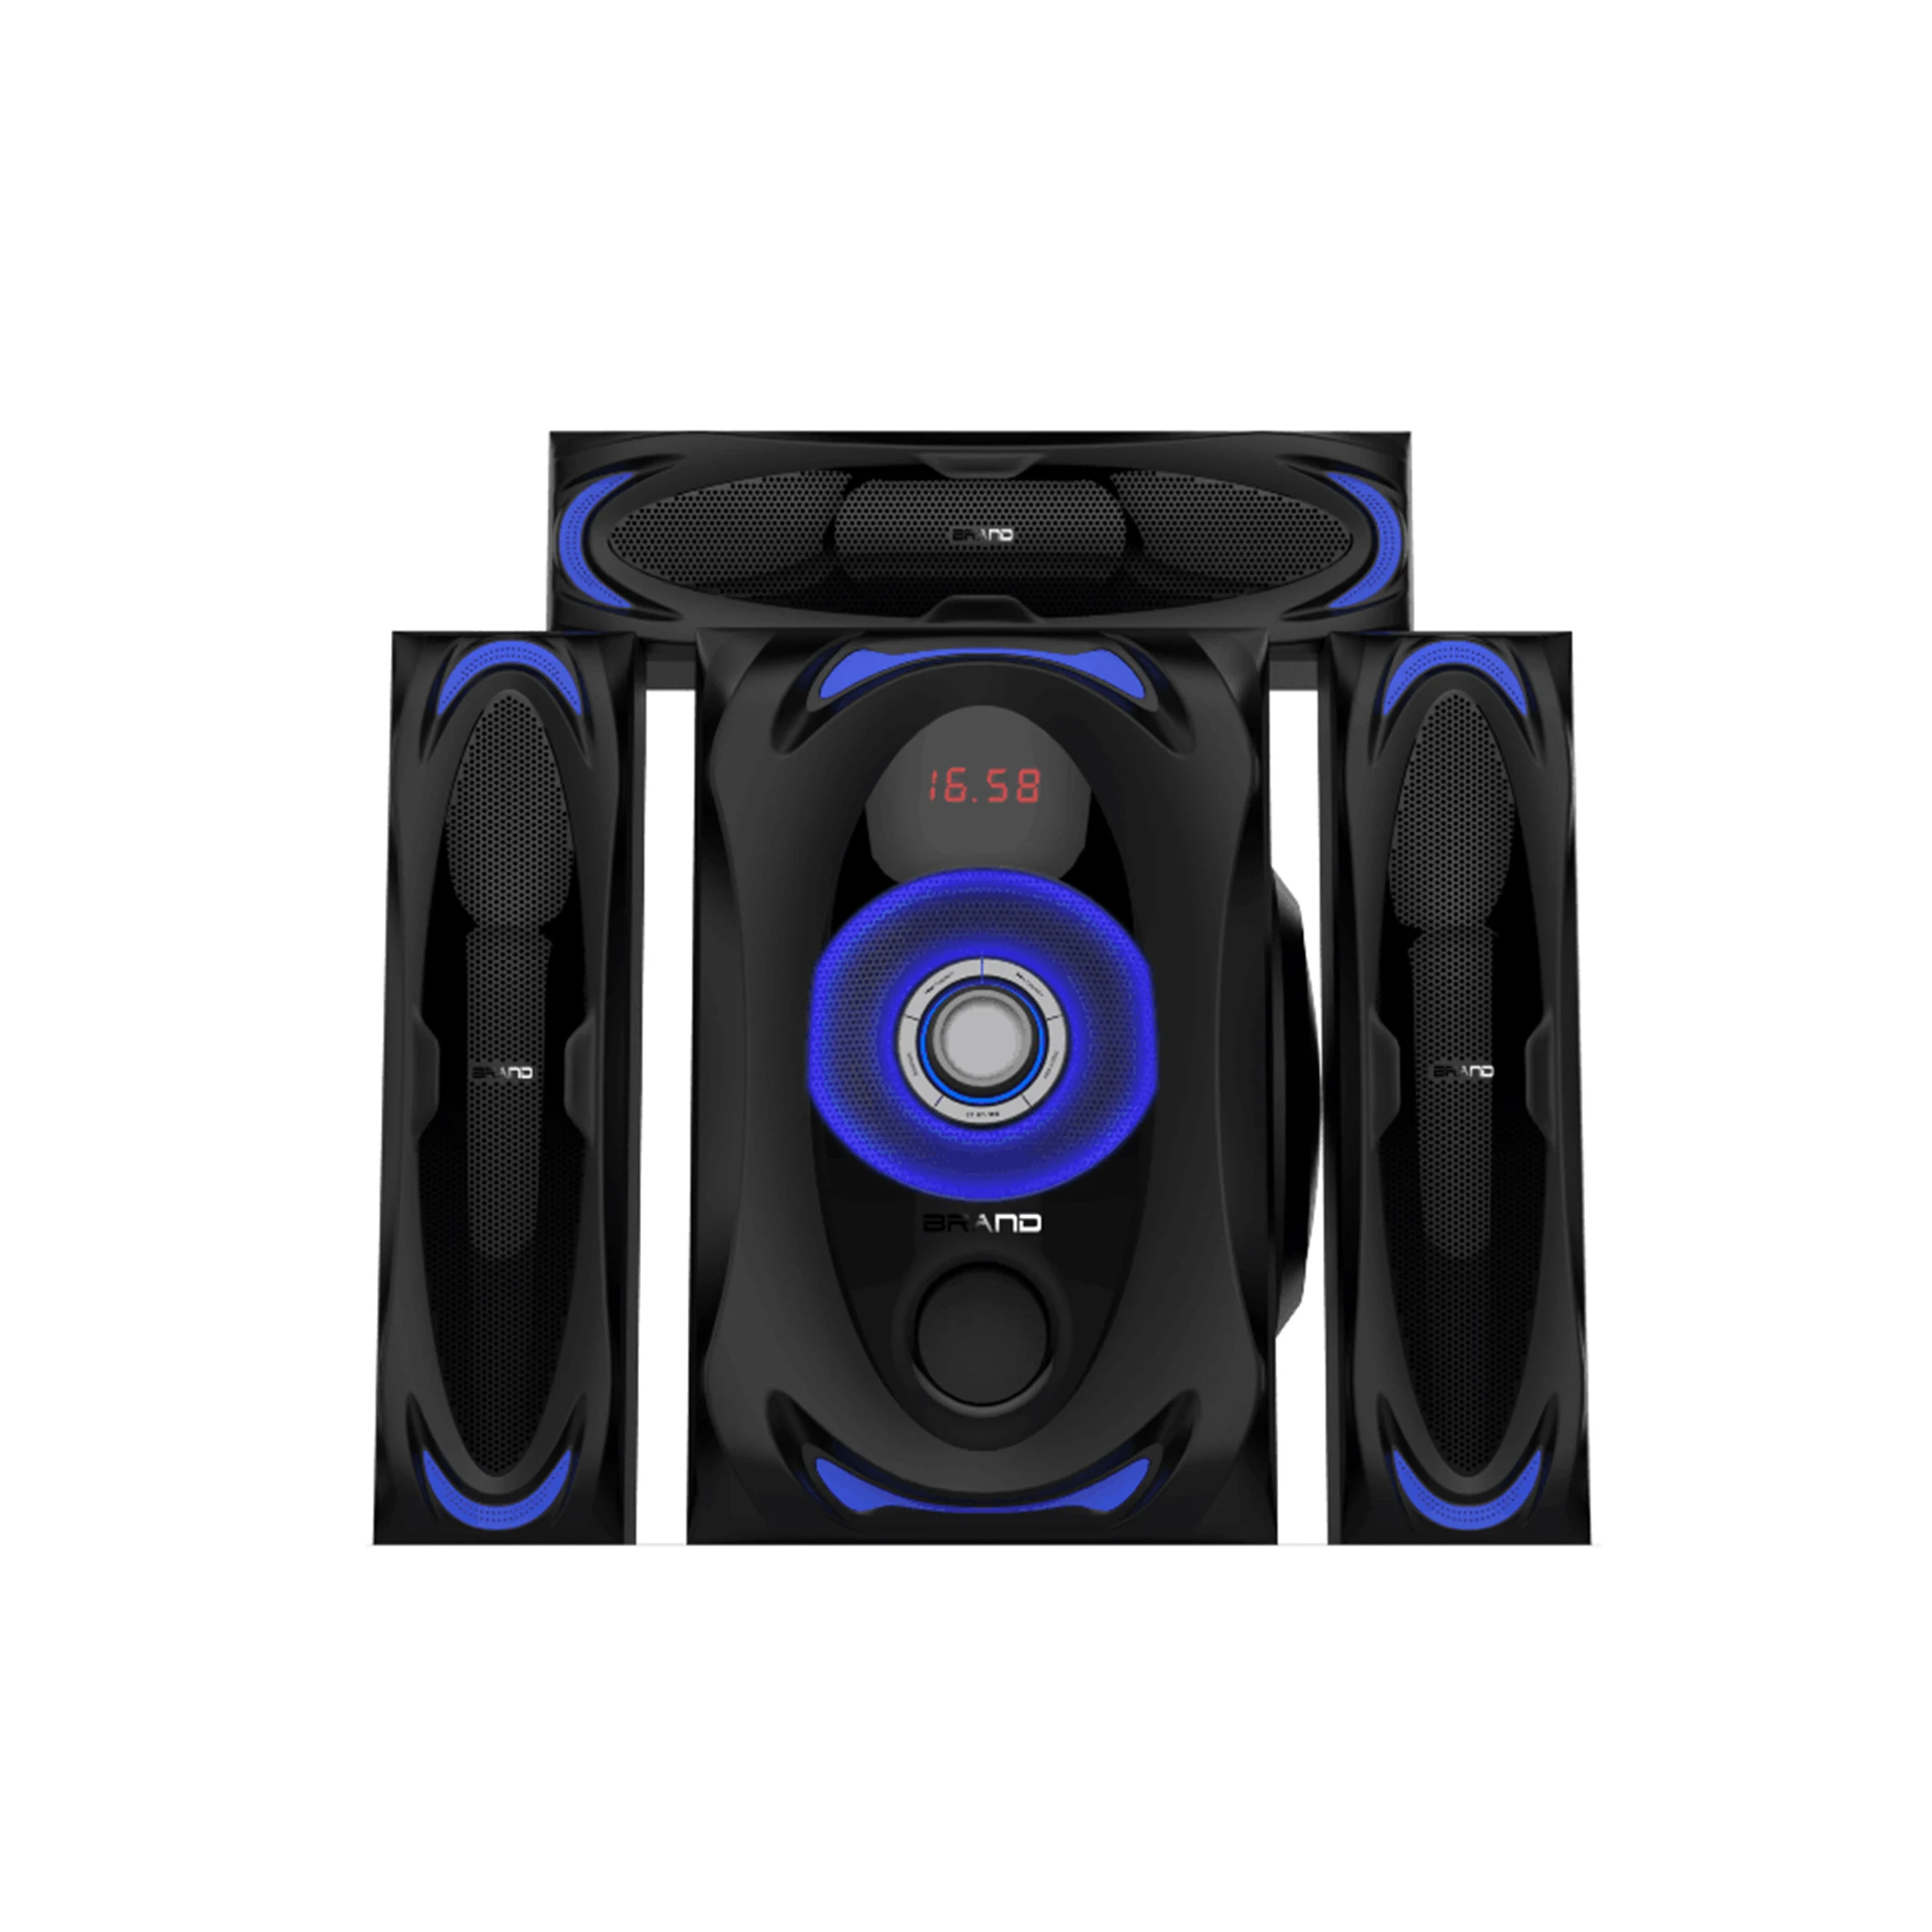 TK-903-3.1 Good quality Customized karaoke multimedia speaker 3.1 CH  home theater speaker system